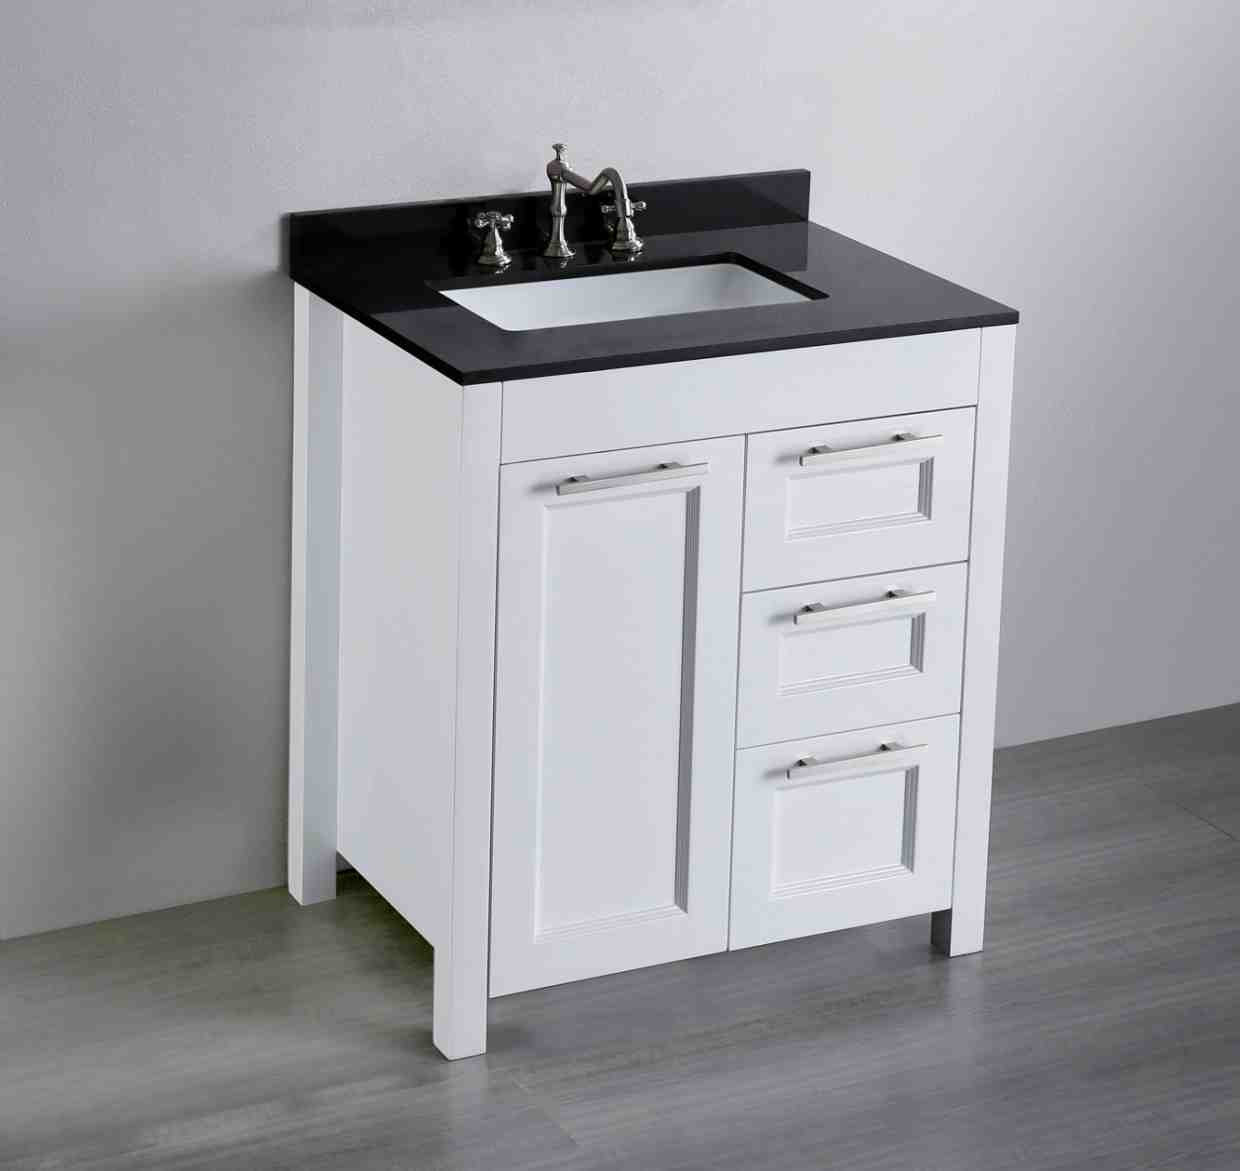 30 Inch Bathroom Vanity Cabinet
 30 Inch Vanity Cabinet Home Furniture Design